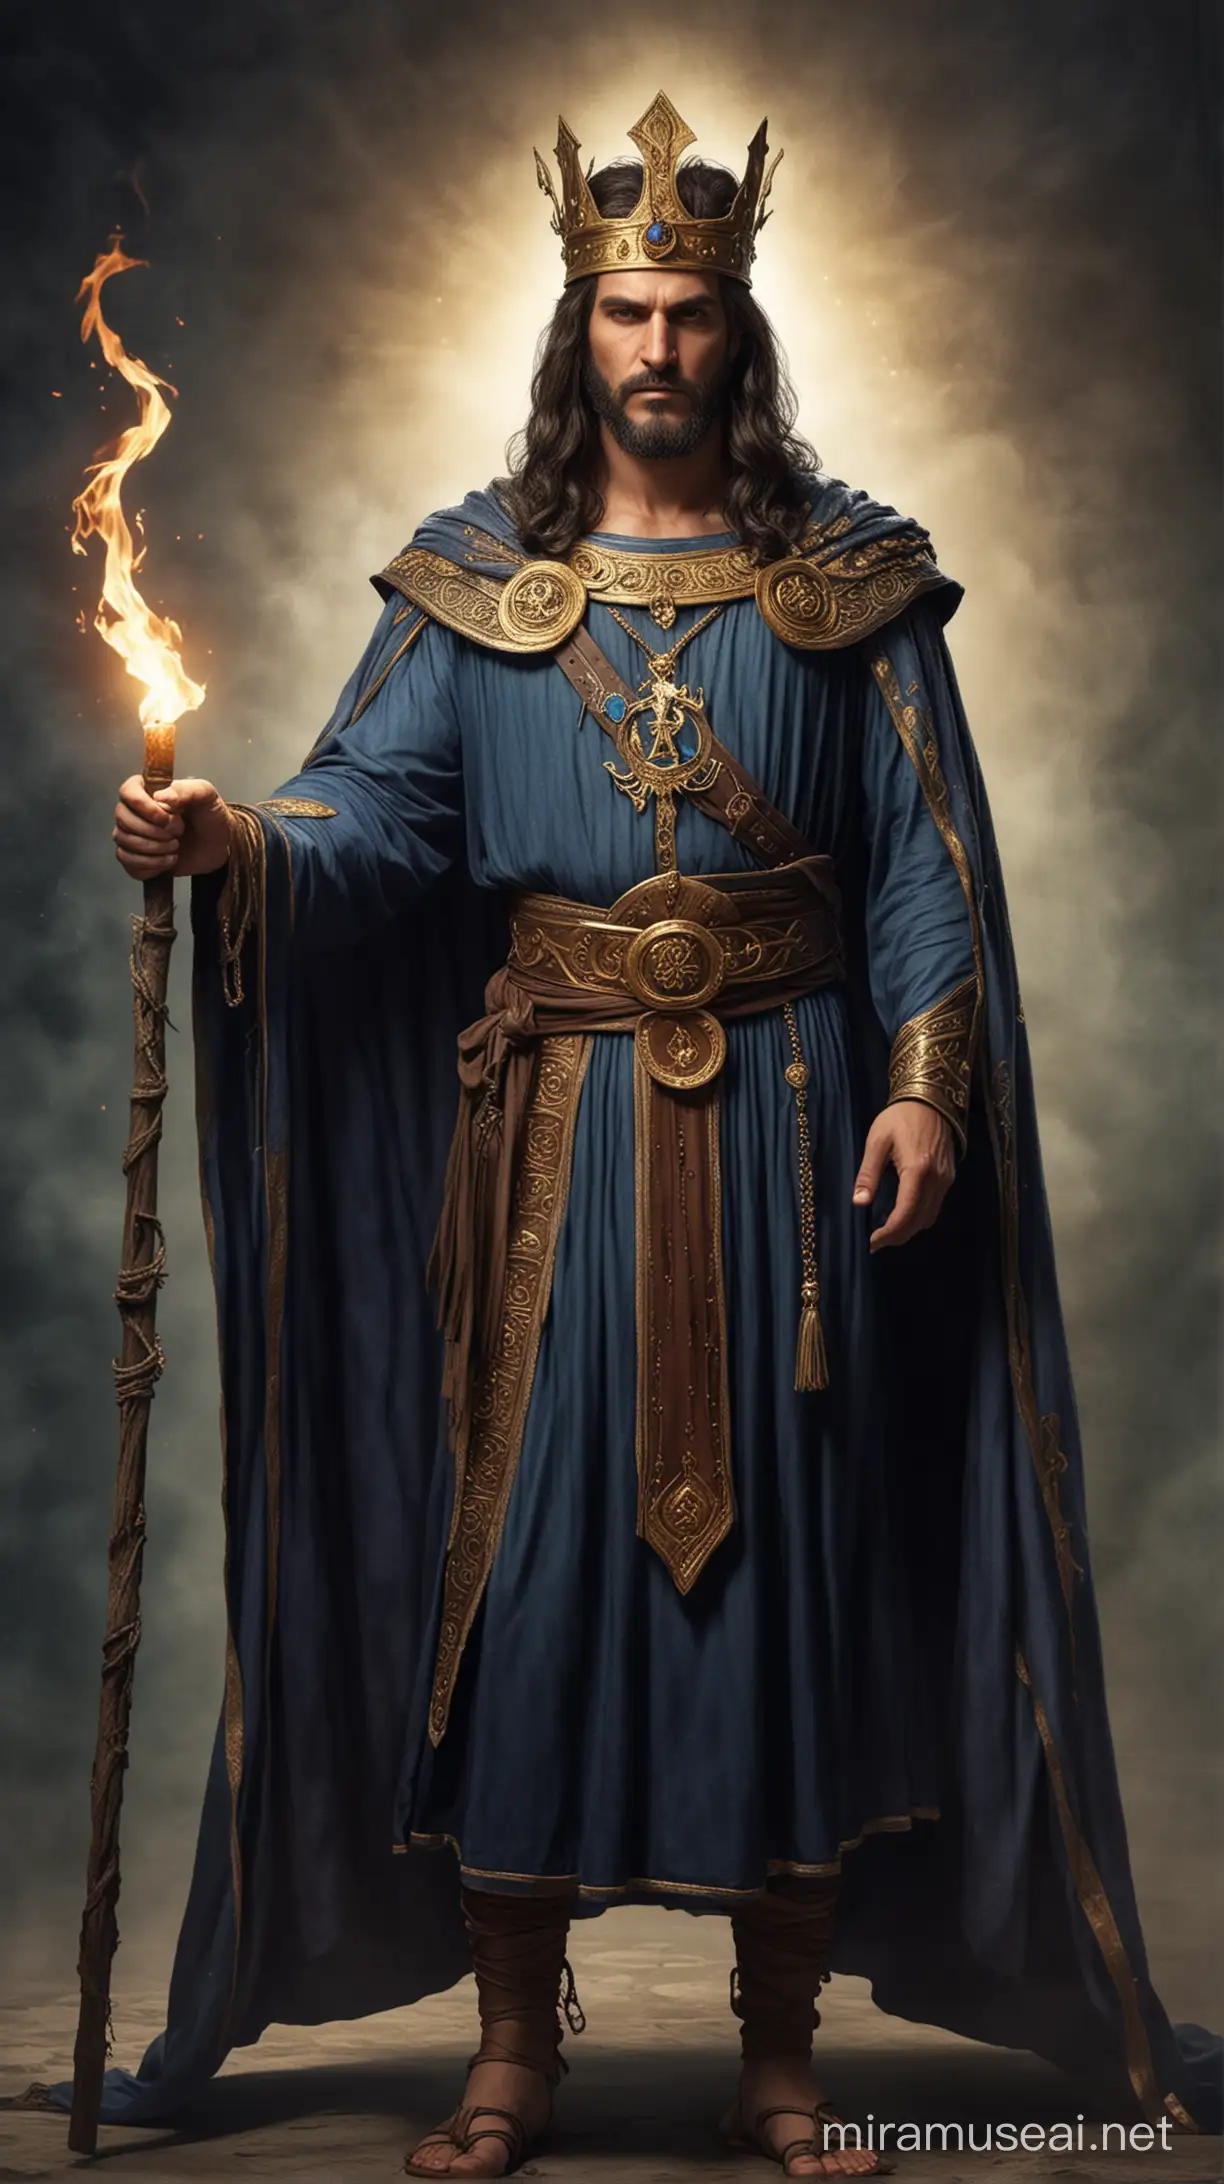 Mystical King Sorcerer in Regal Greek Attire with Enigmatic Witchcraft Aura